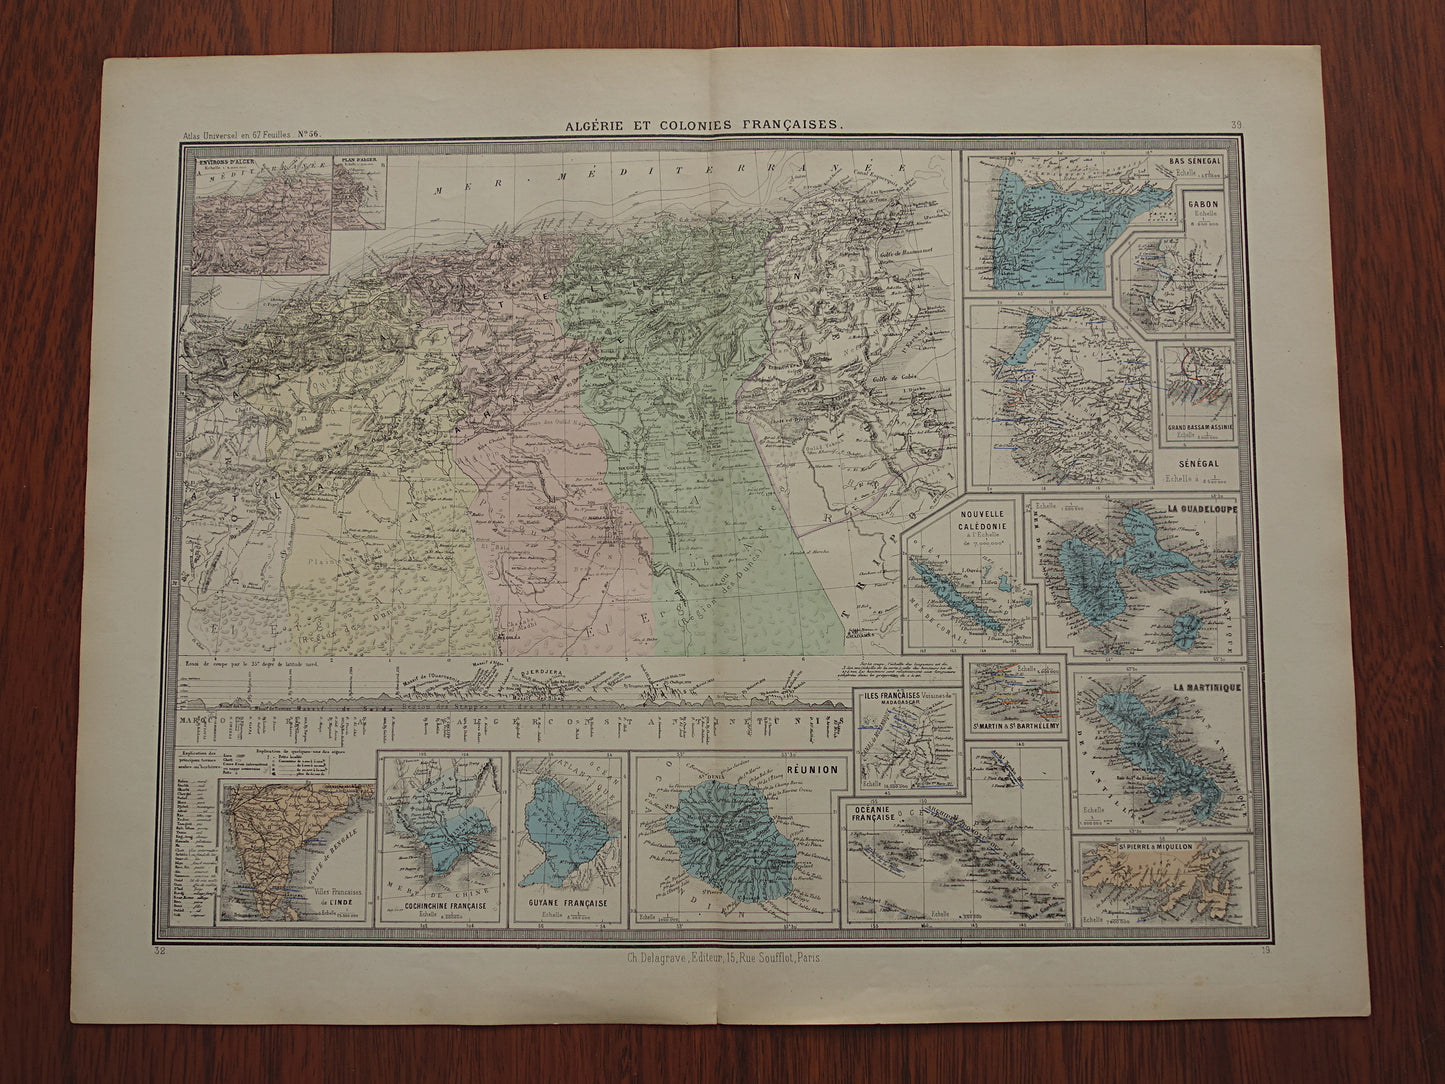 ALGERIJE oude kaart van Algerije en alle Franse Koloniën uit 1876 Antieke grote landkaart poster Frankrijk